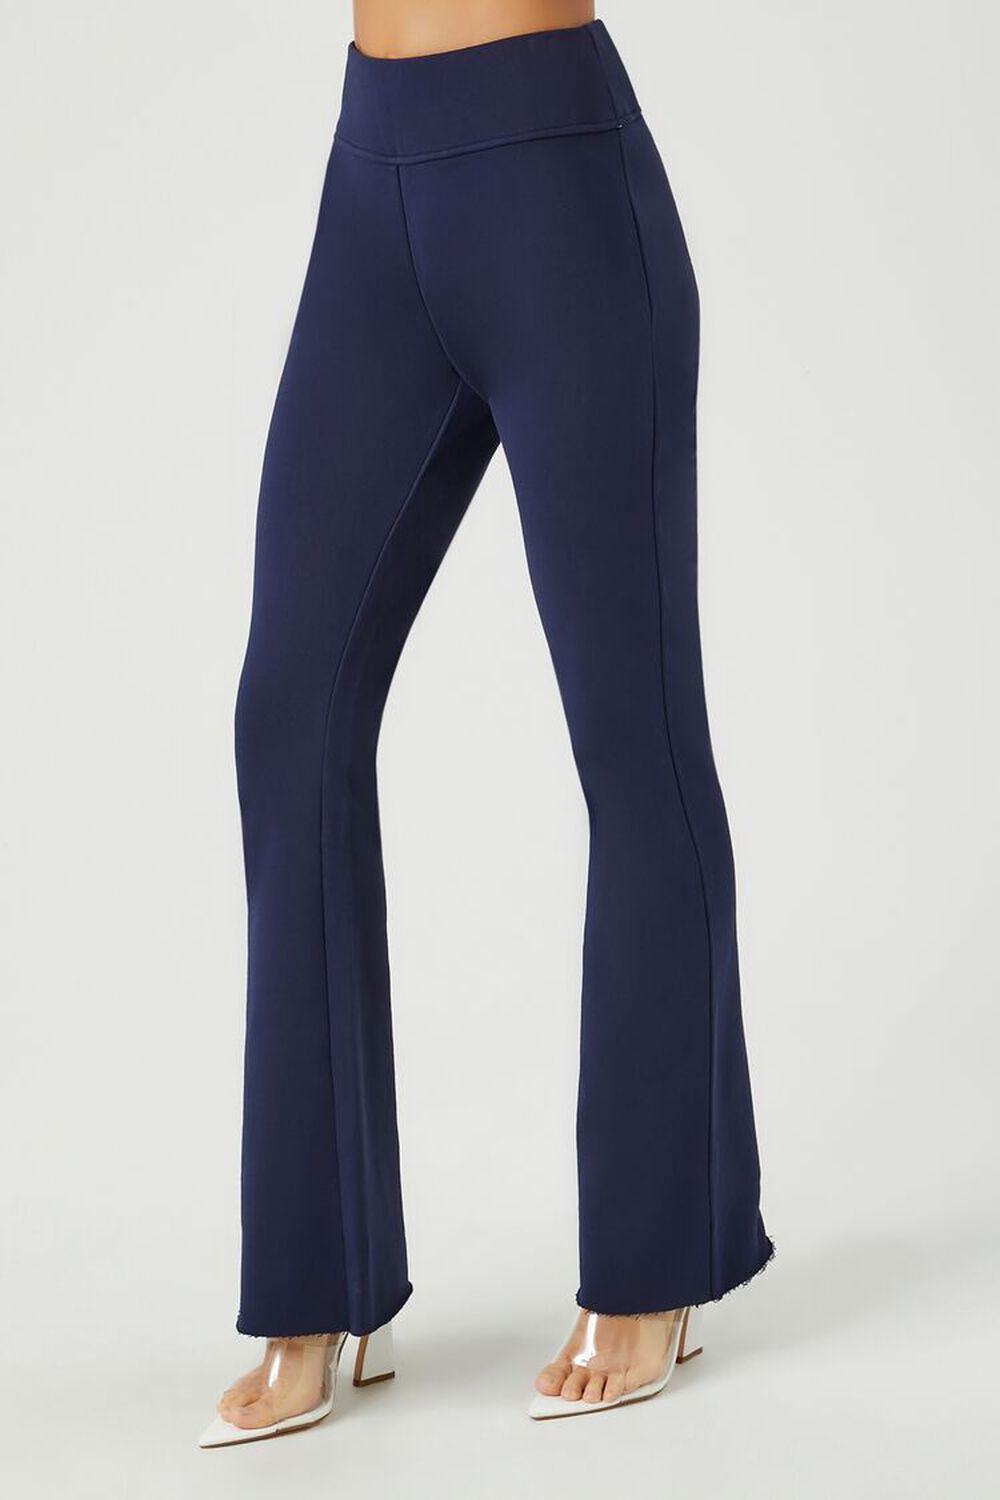 Lululemon High Rise Mini Flare Pant Gray Size 4 - $42 (64% Off